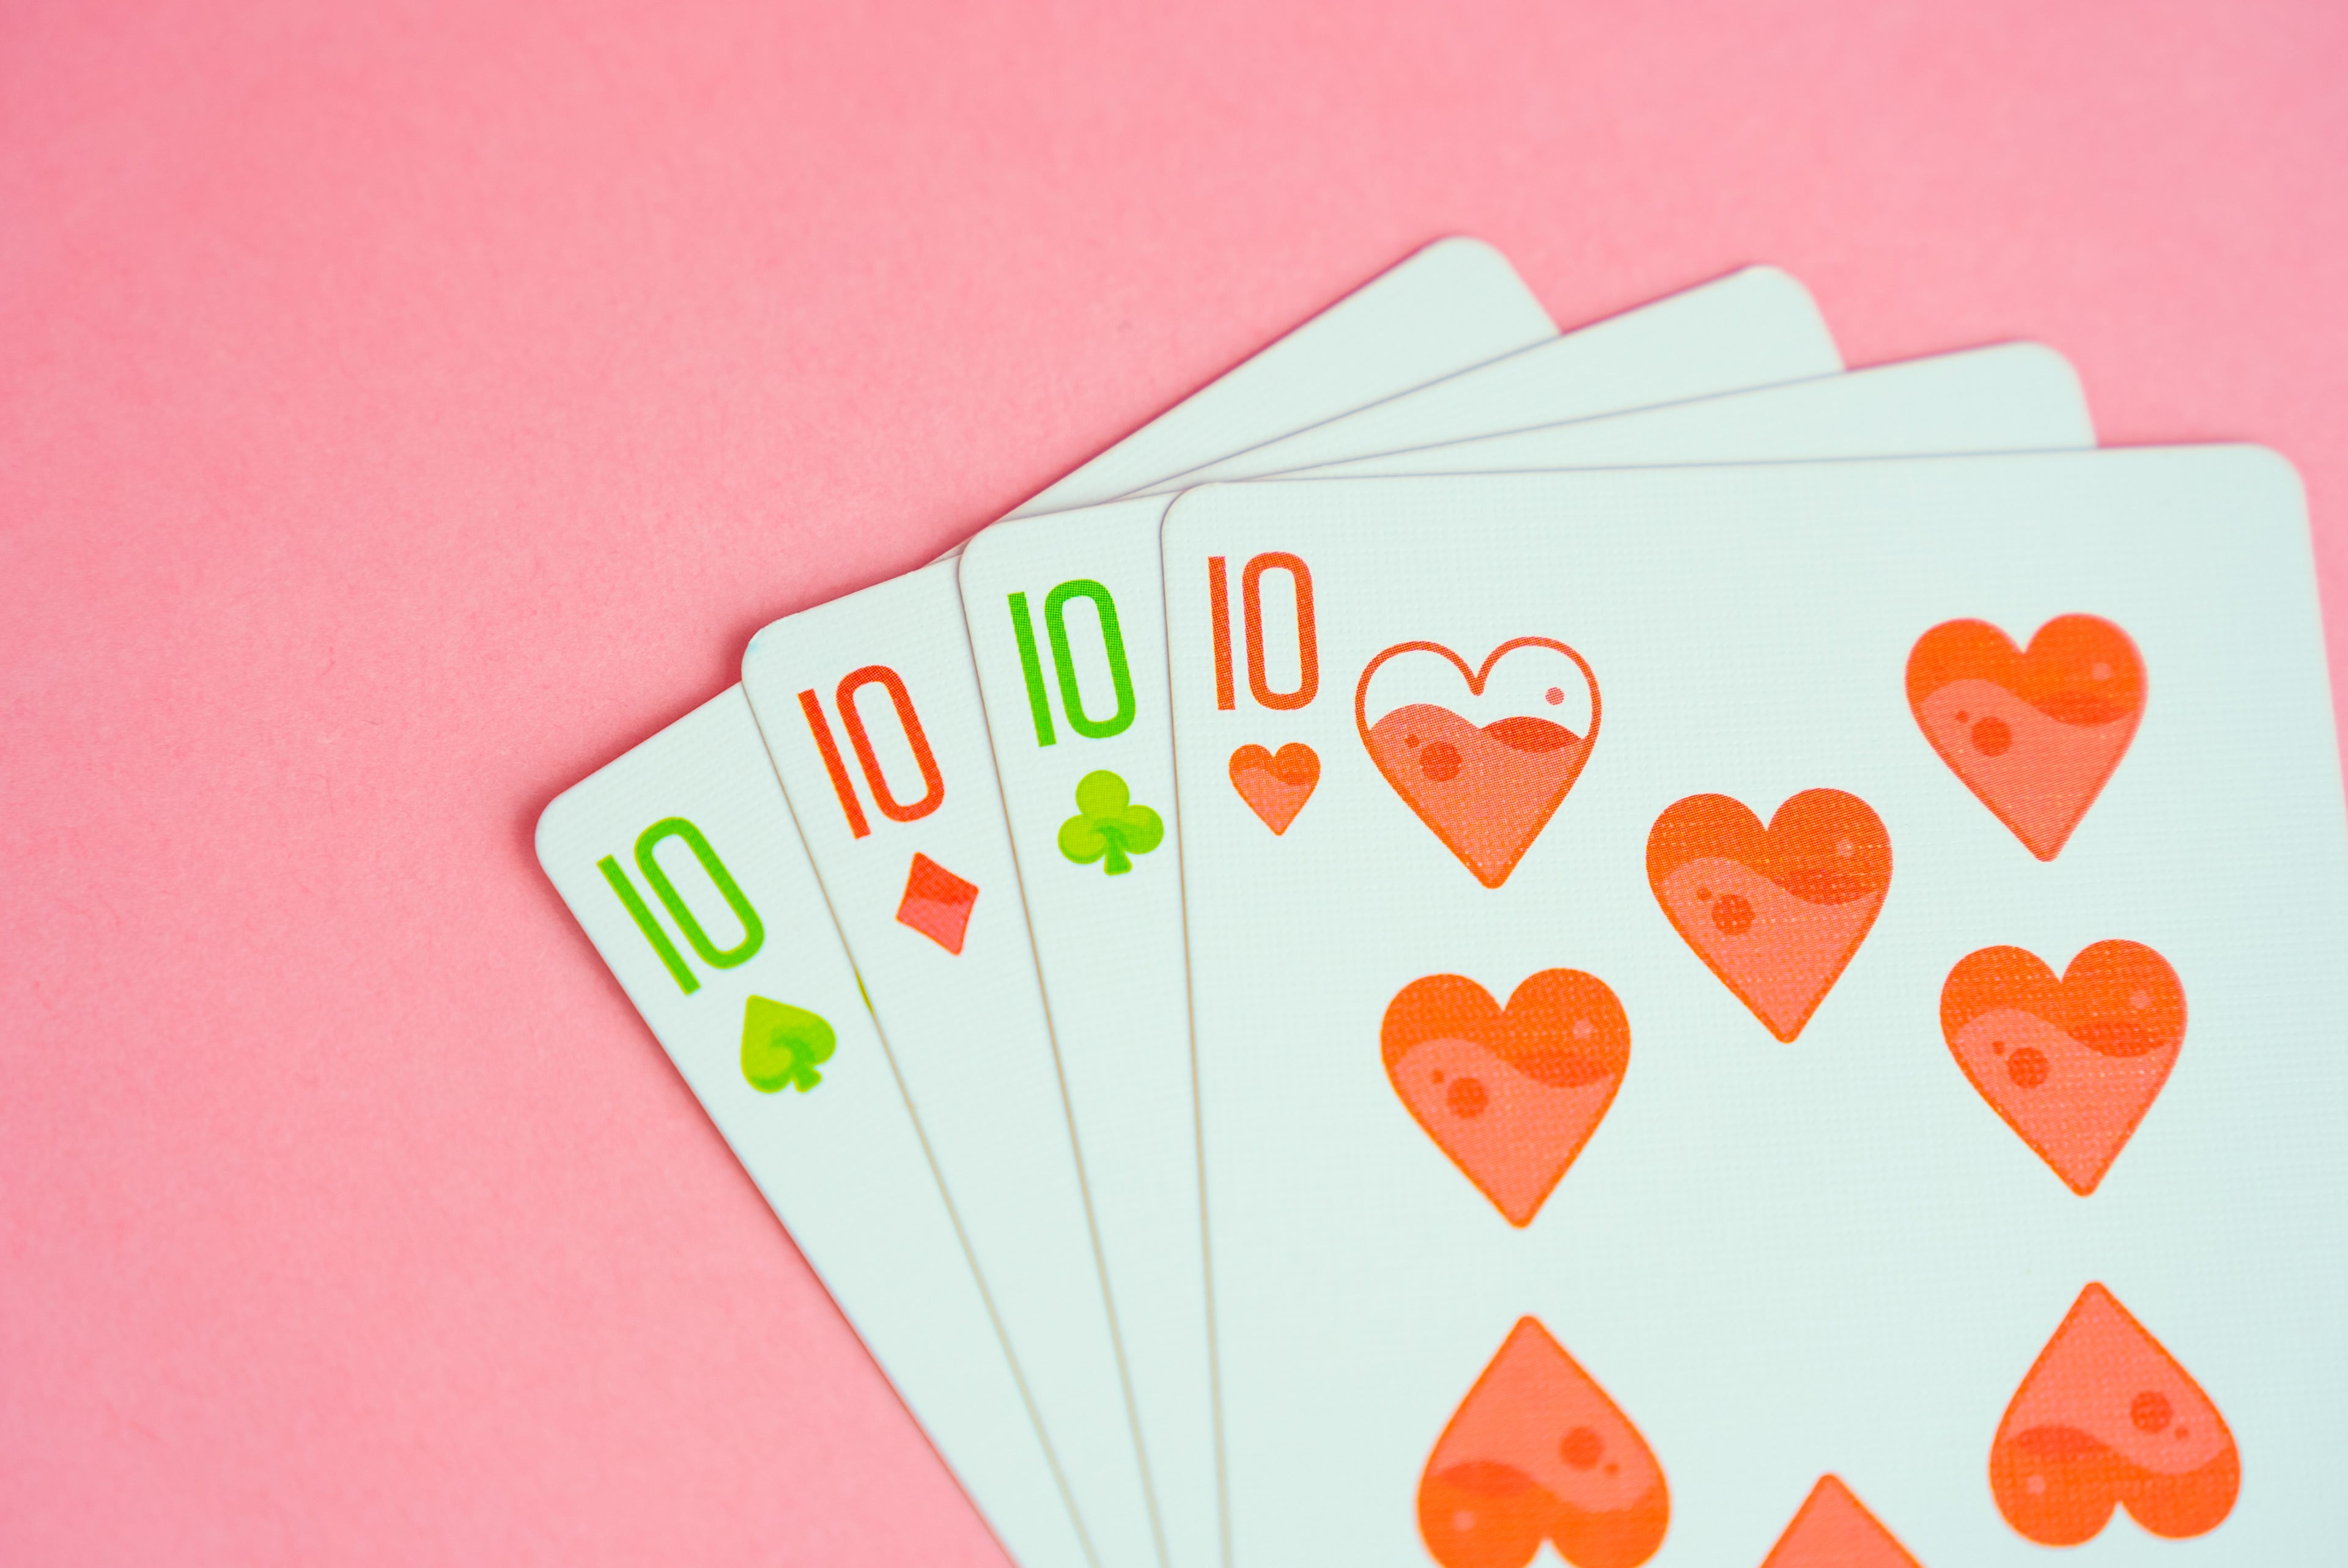 Peach SOJU Playing Cards